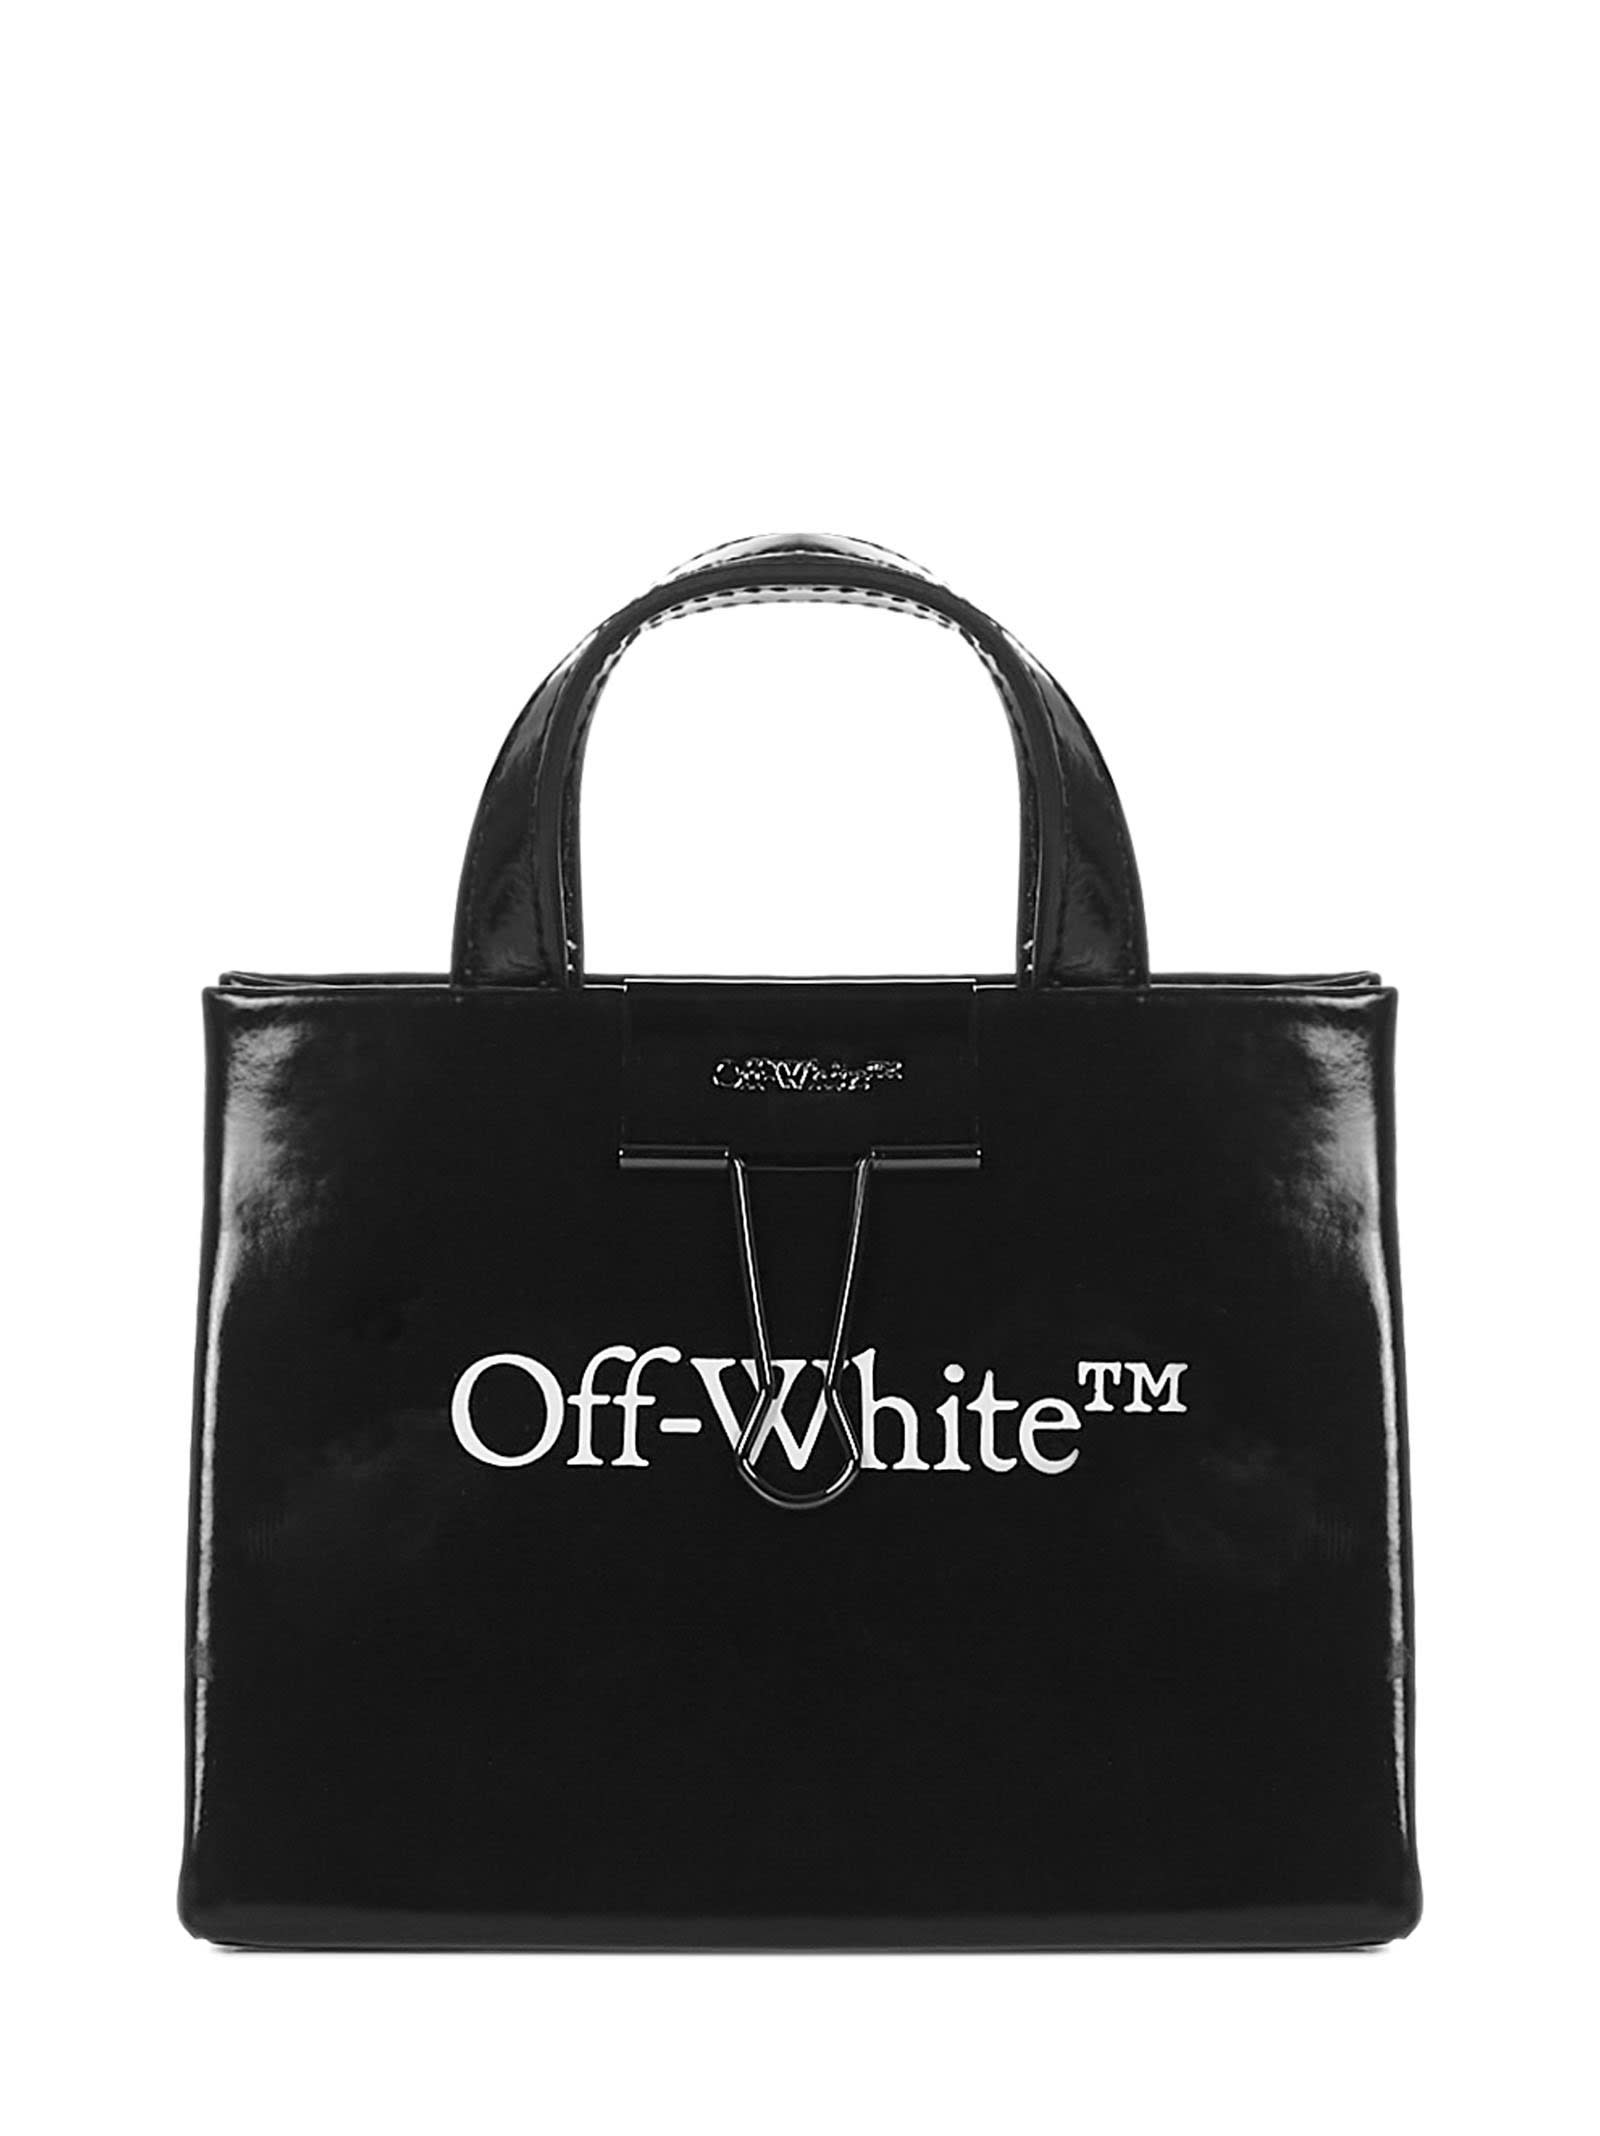 Off-white Baby Box Handbag